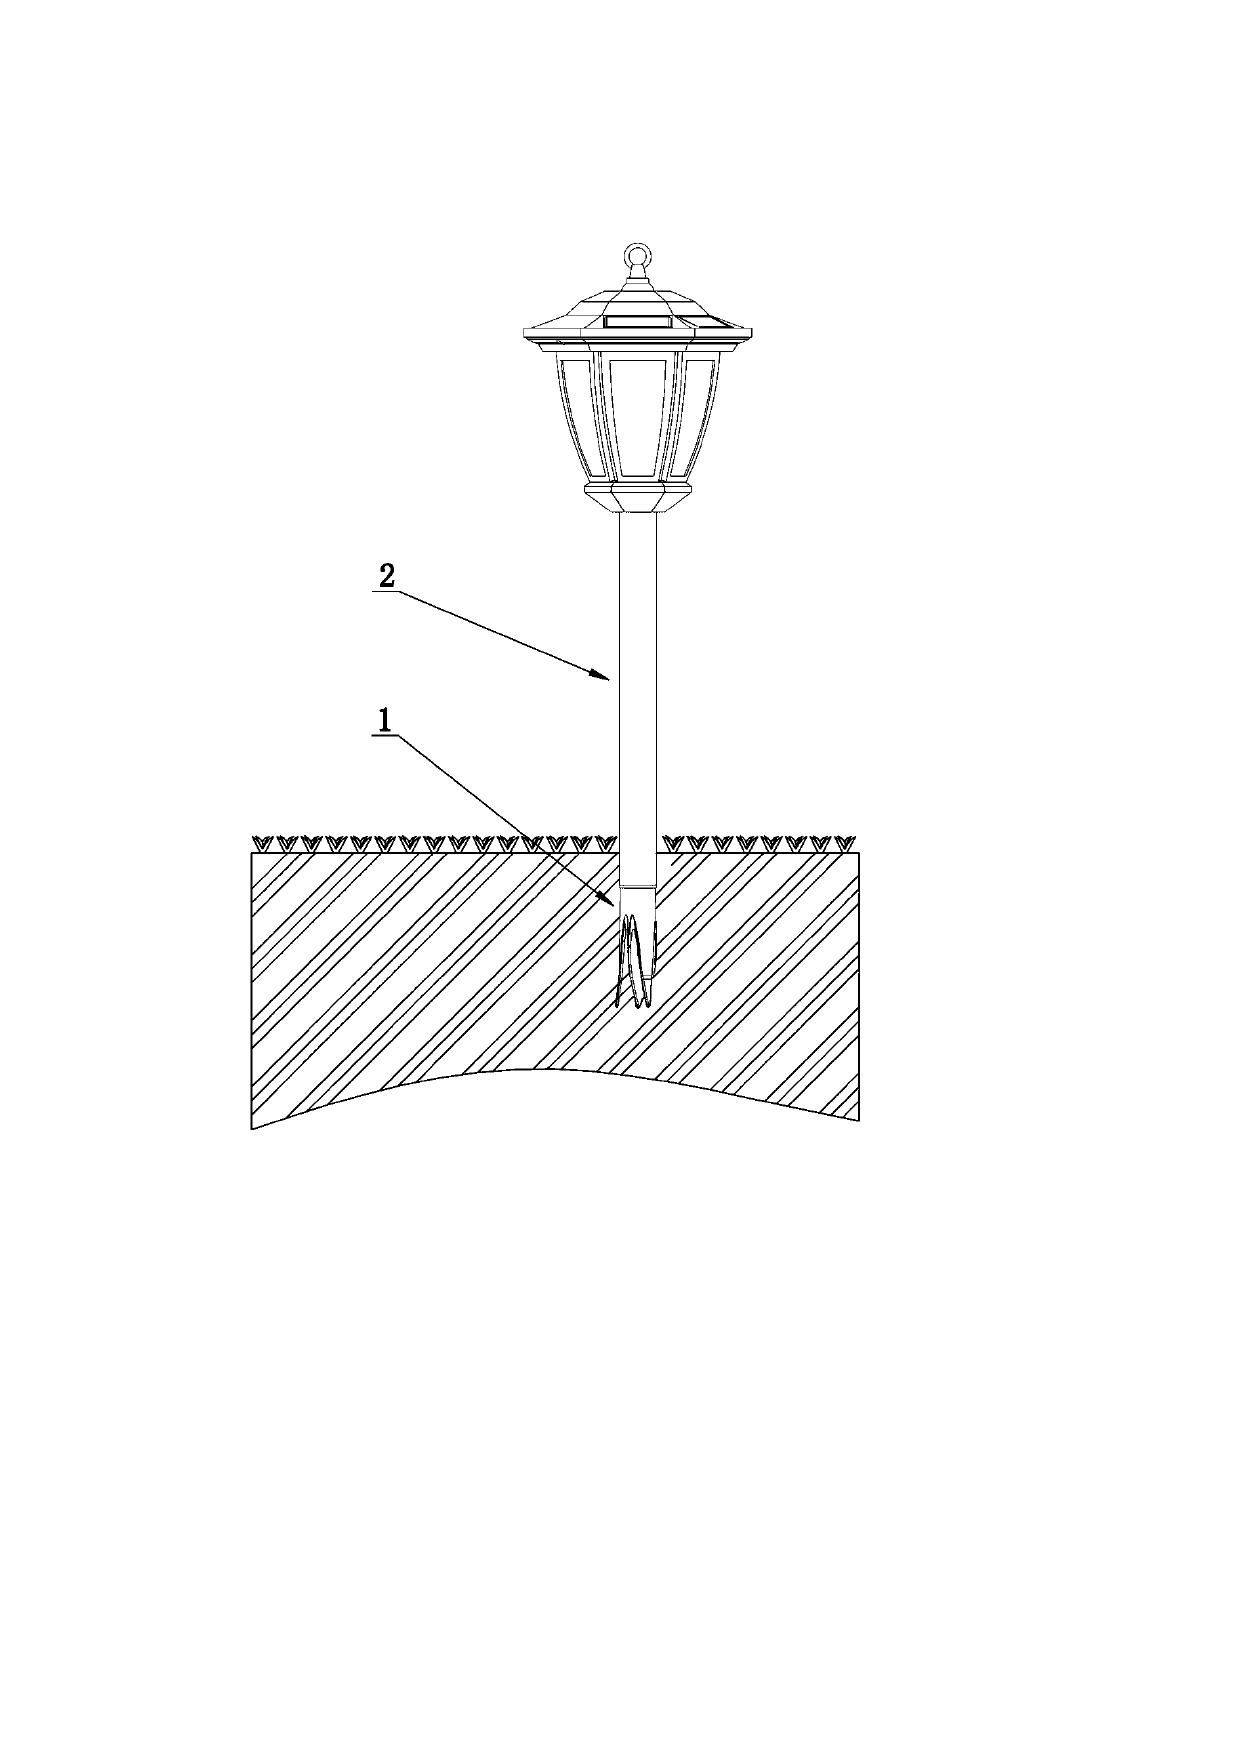 Angle plug device for fixing lamp post